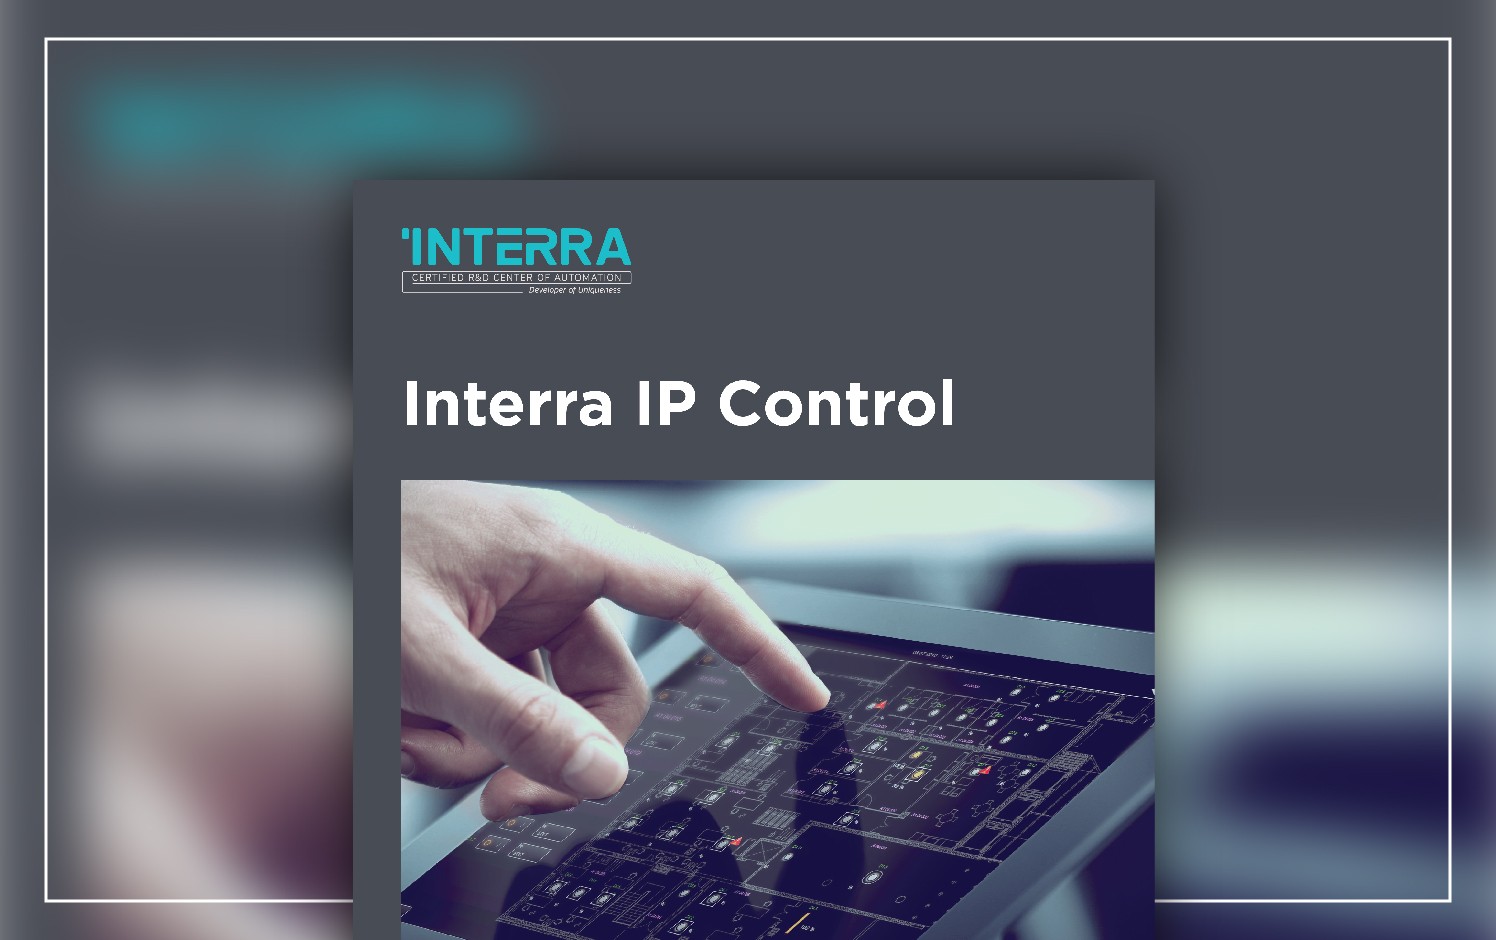 IP-Control